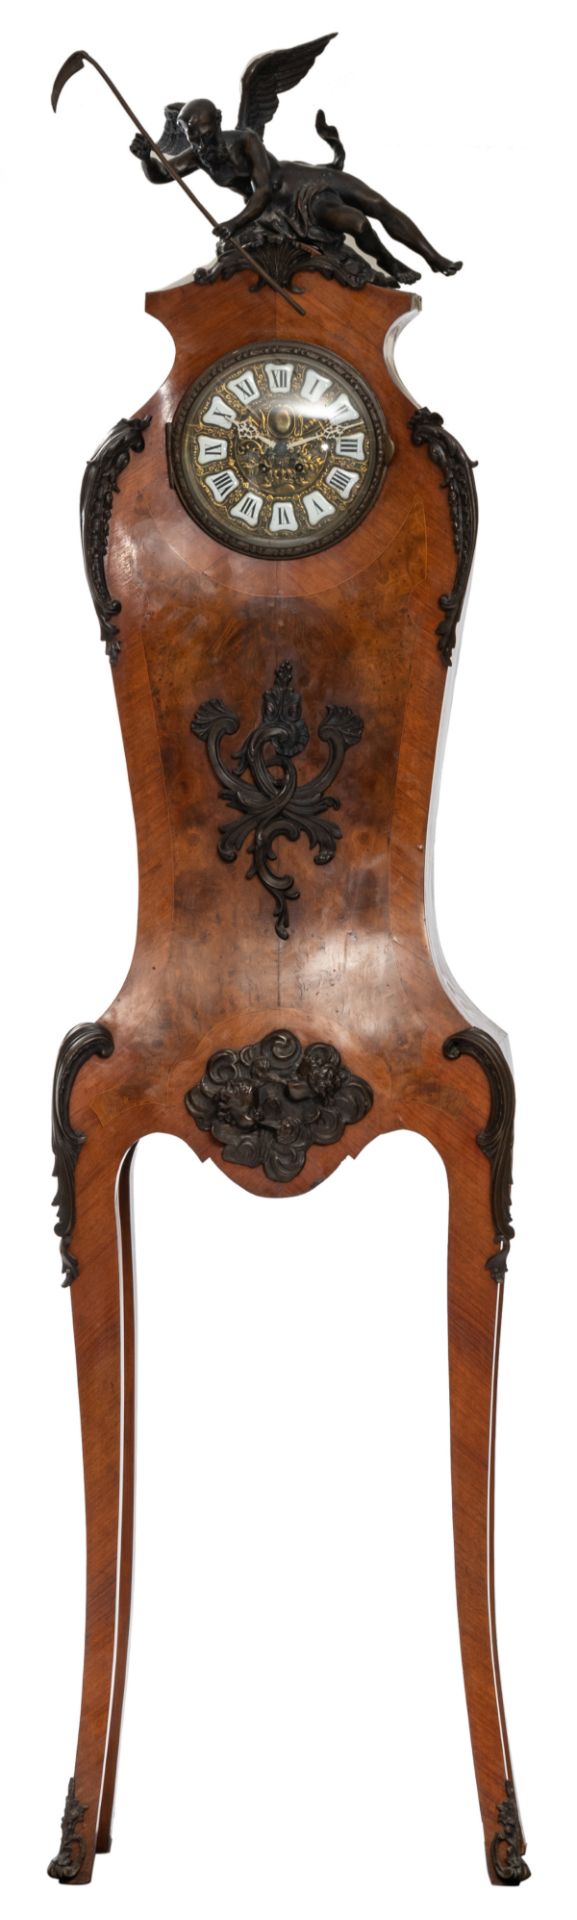 An impressive 19thC violin shaped mahogany and burr-walnut veneered regulator clock on cabriole legs